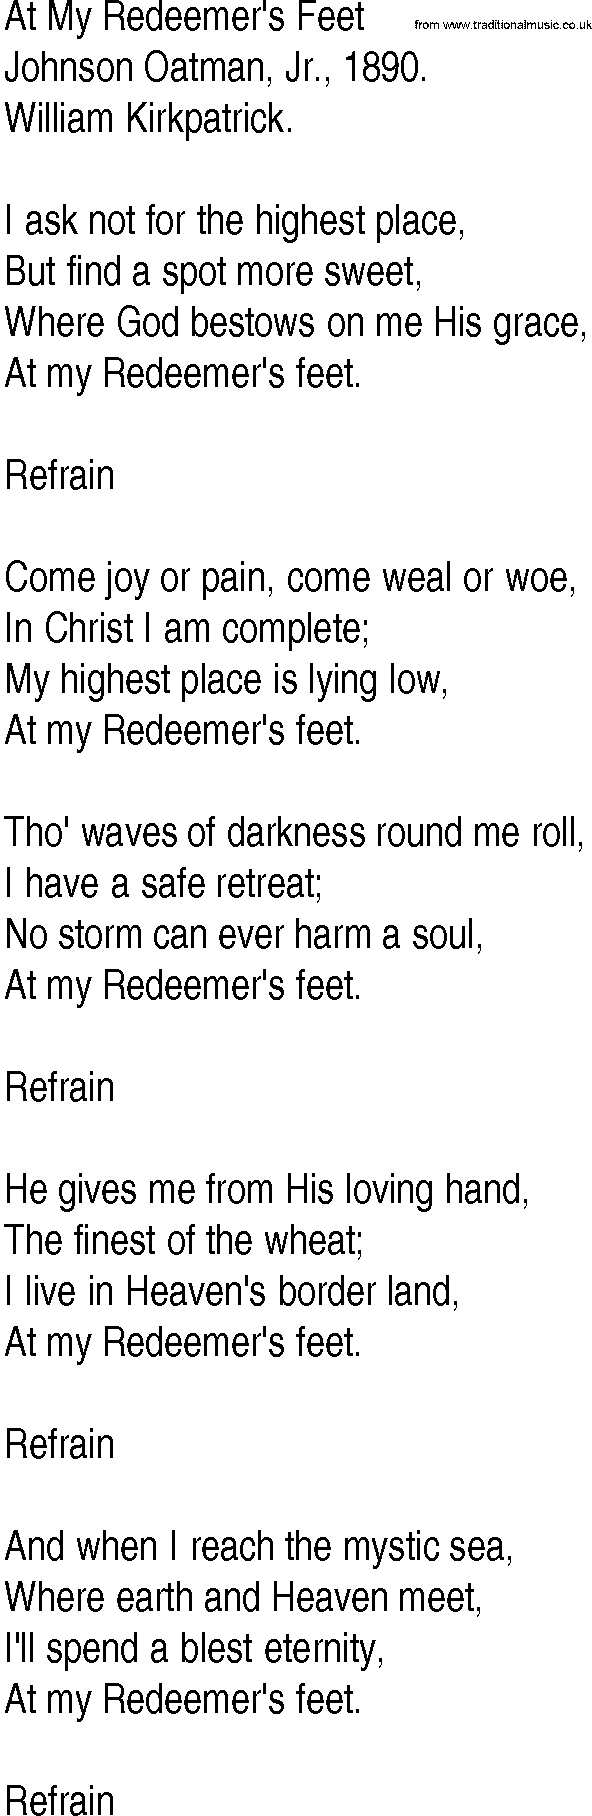 Hymn and Gospel Song: At My Redeemer's Feet by Johnson Oatman Jr lyrics